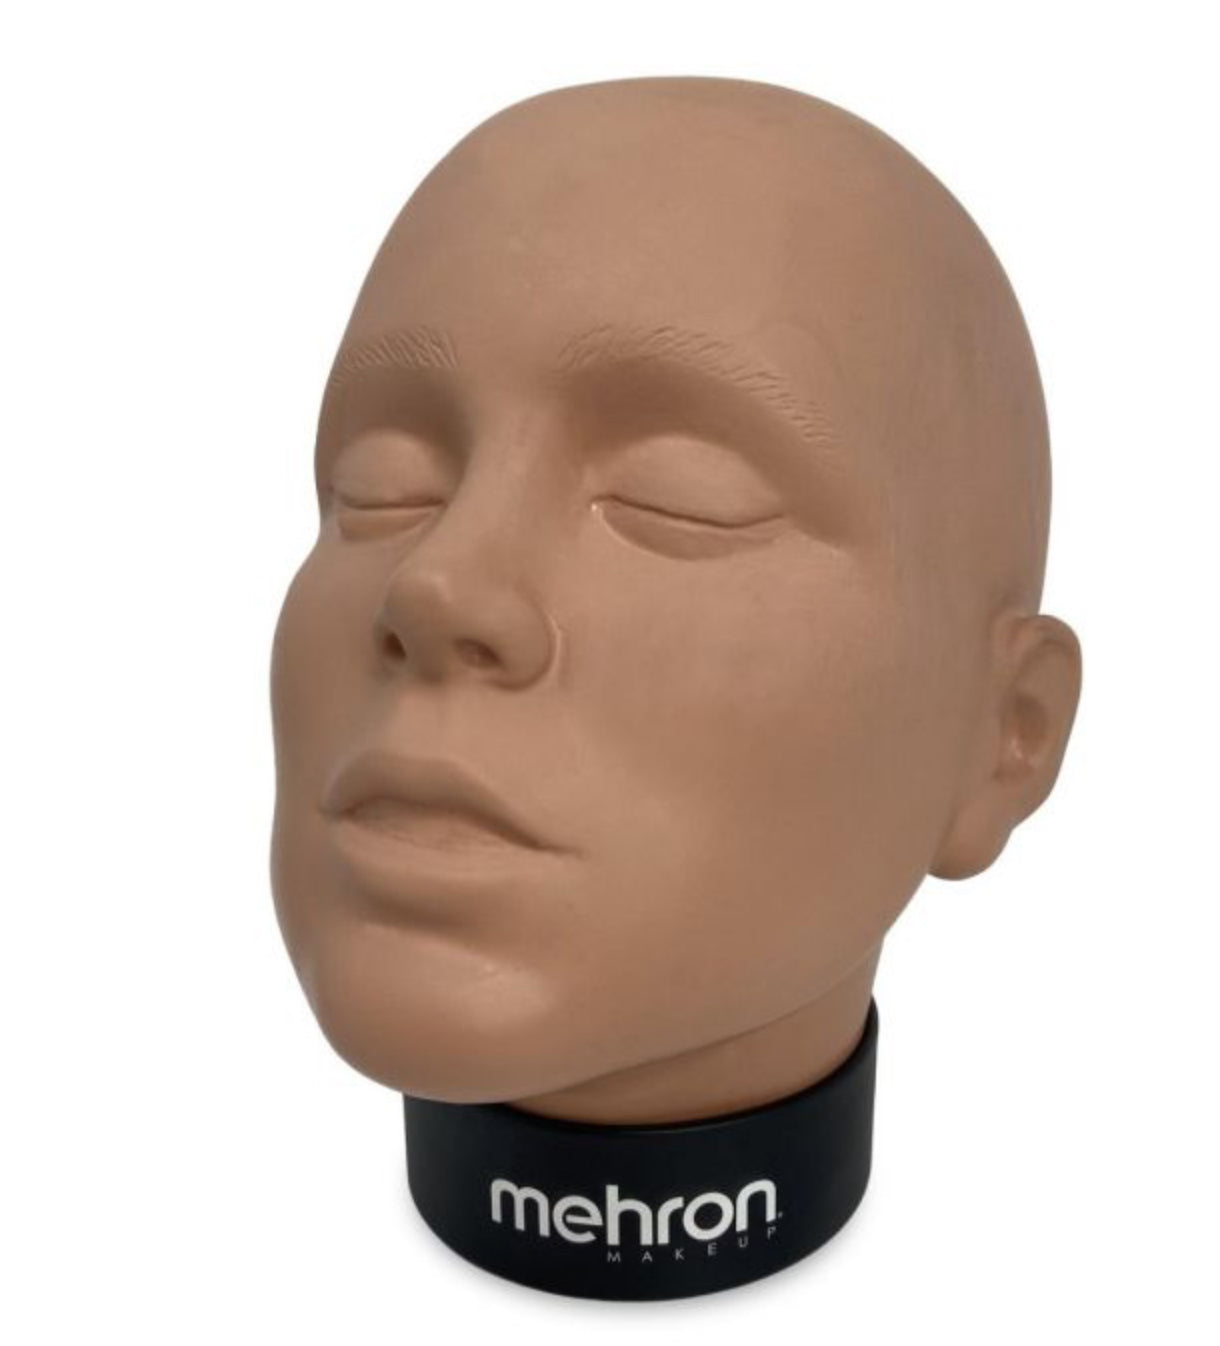 Mehron Facepainting Practice Head